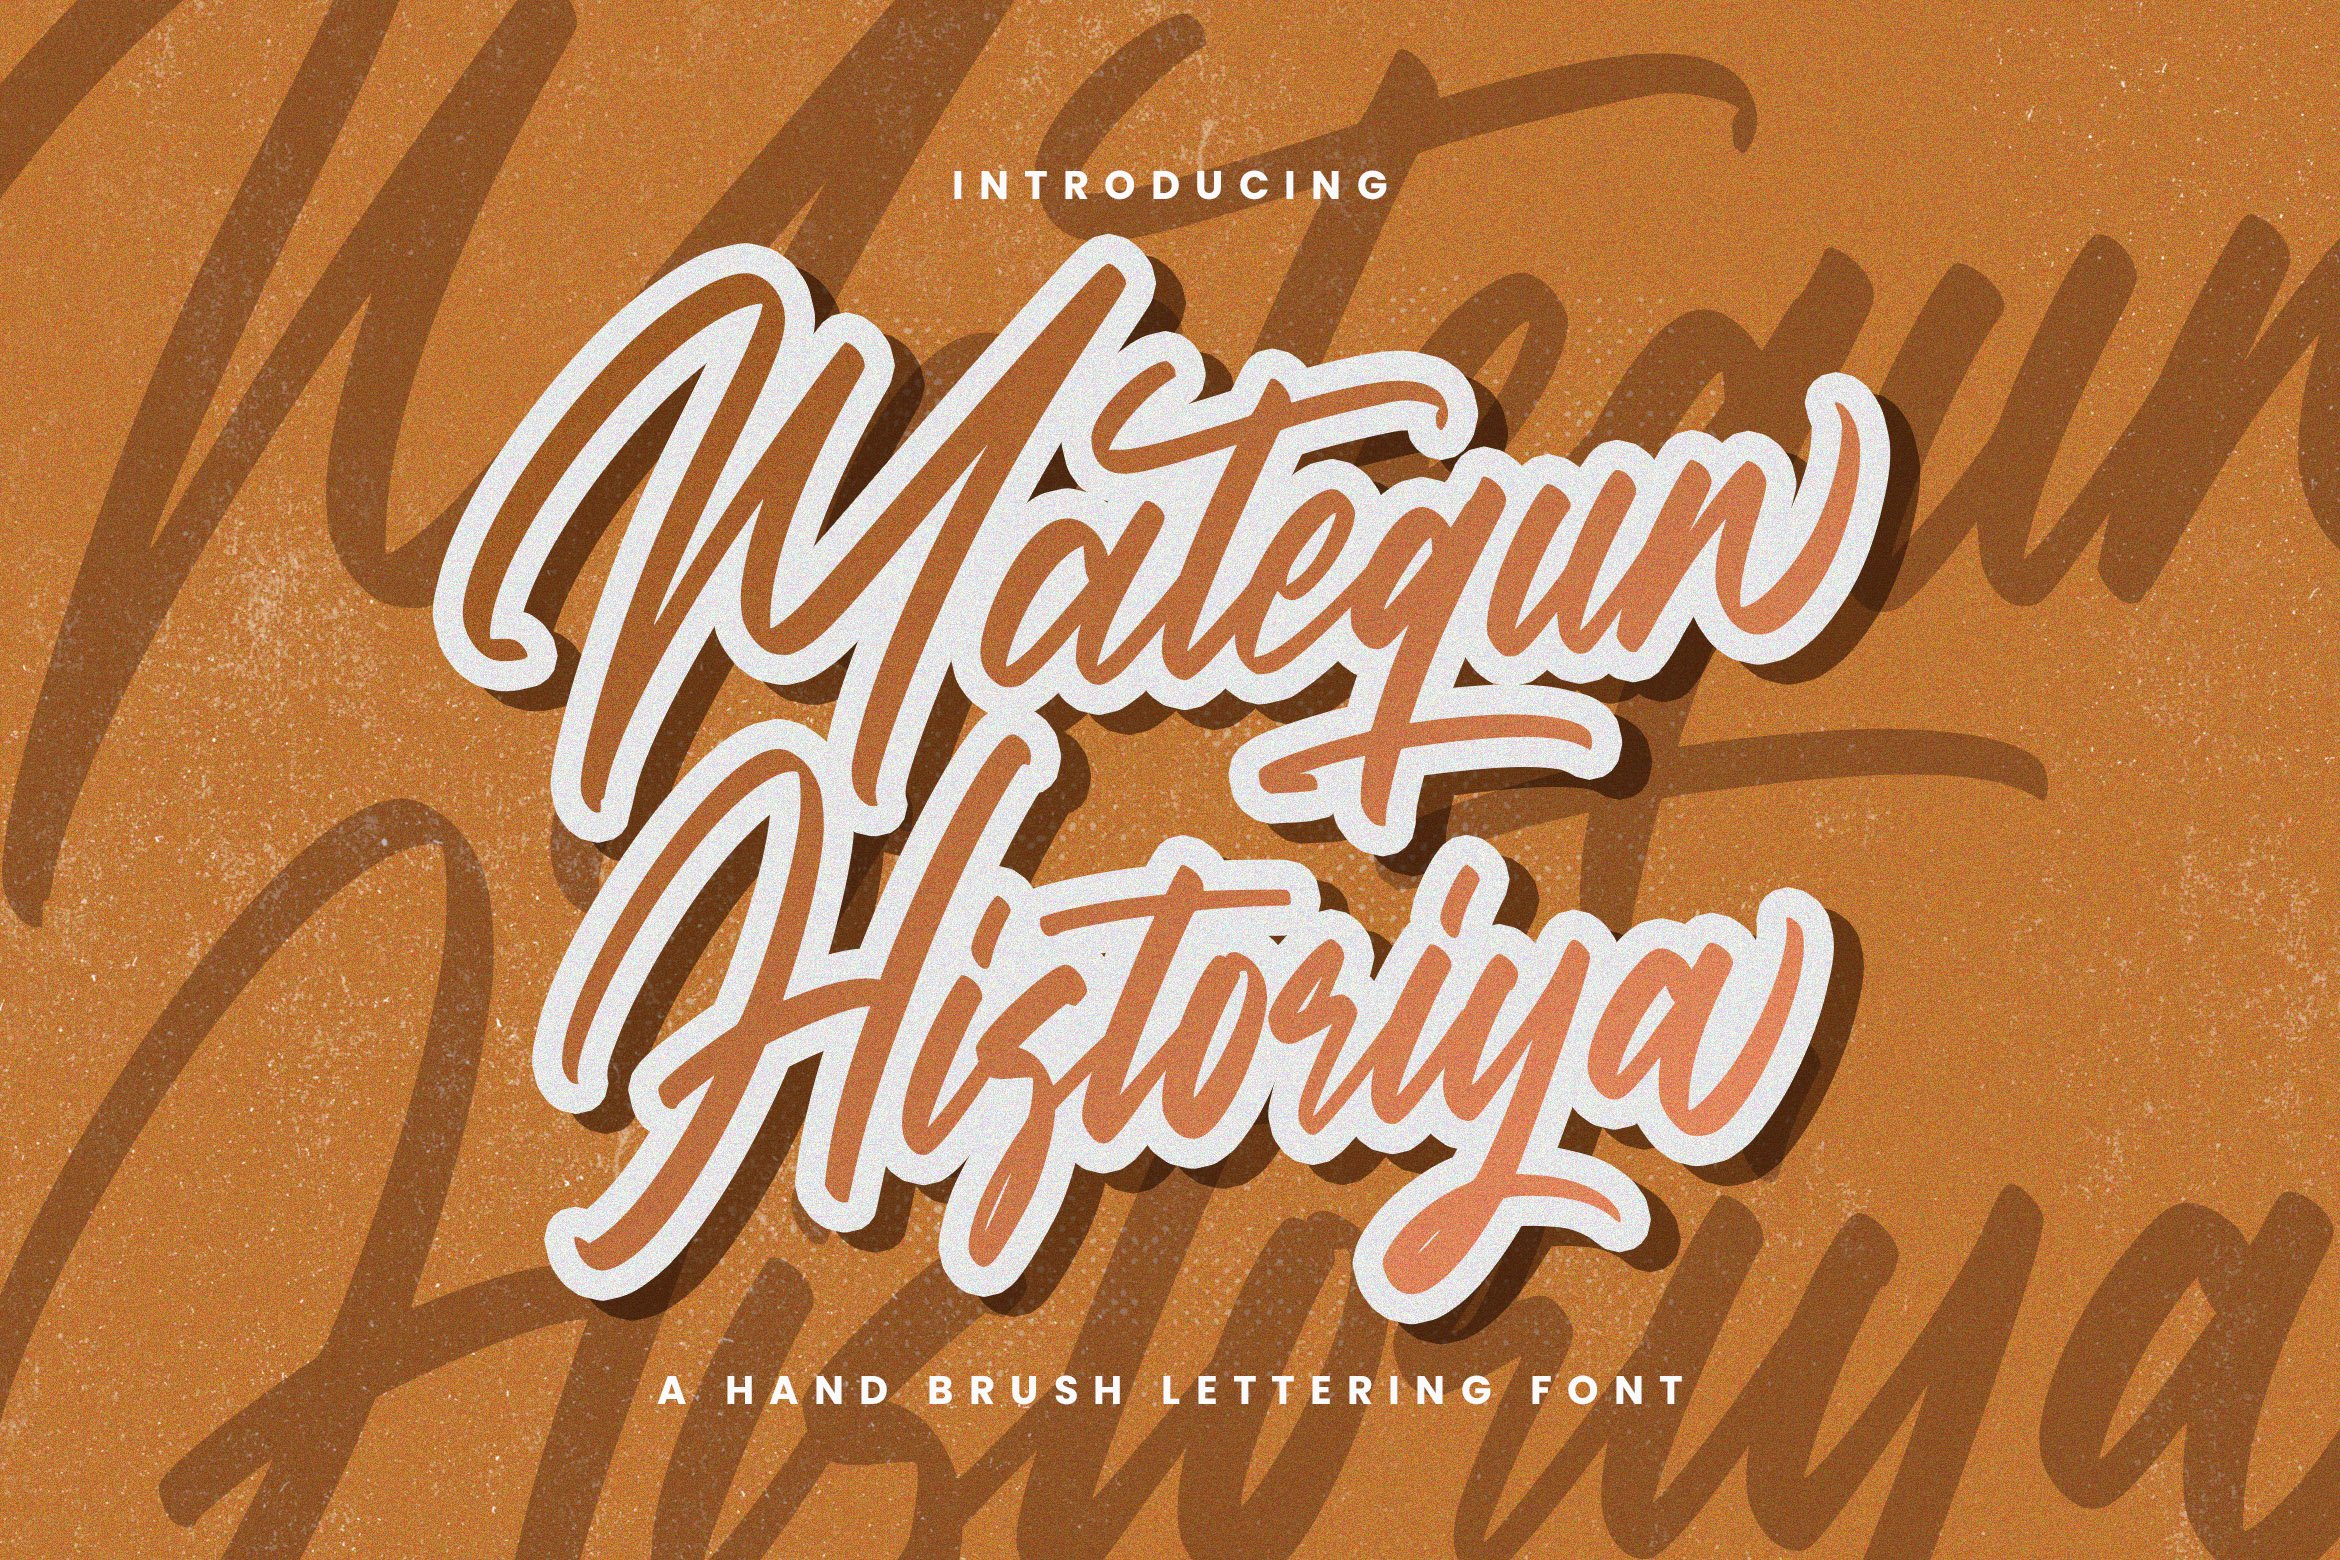 Matequn Historiya - Handwritten Font cover image.